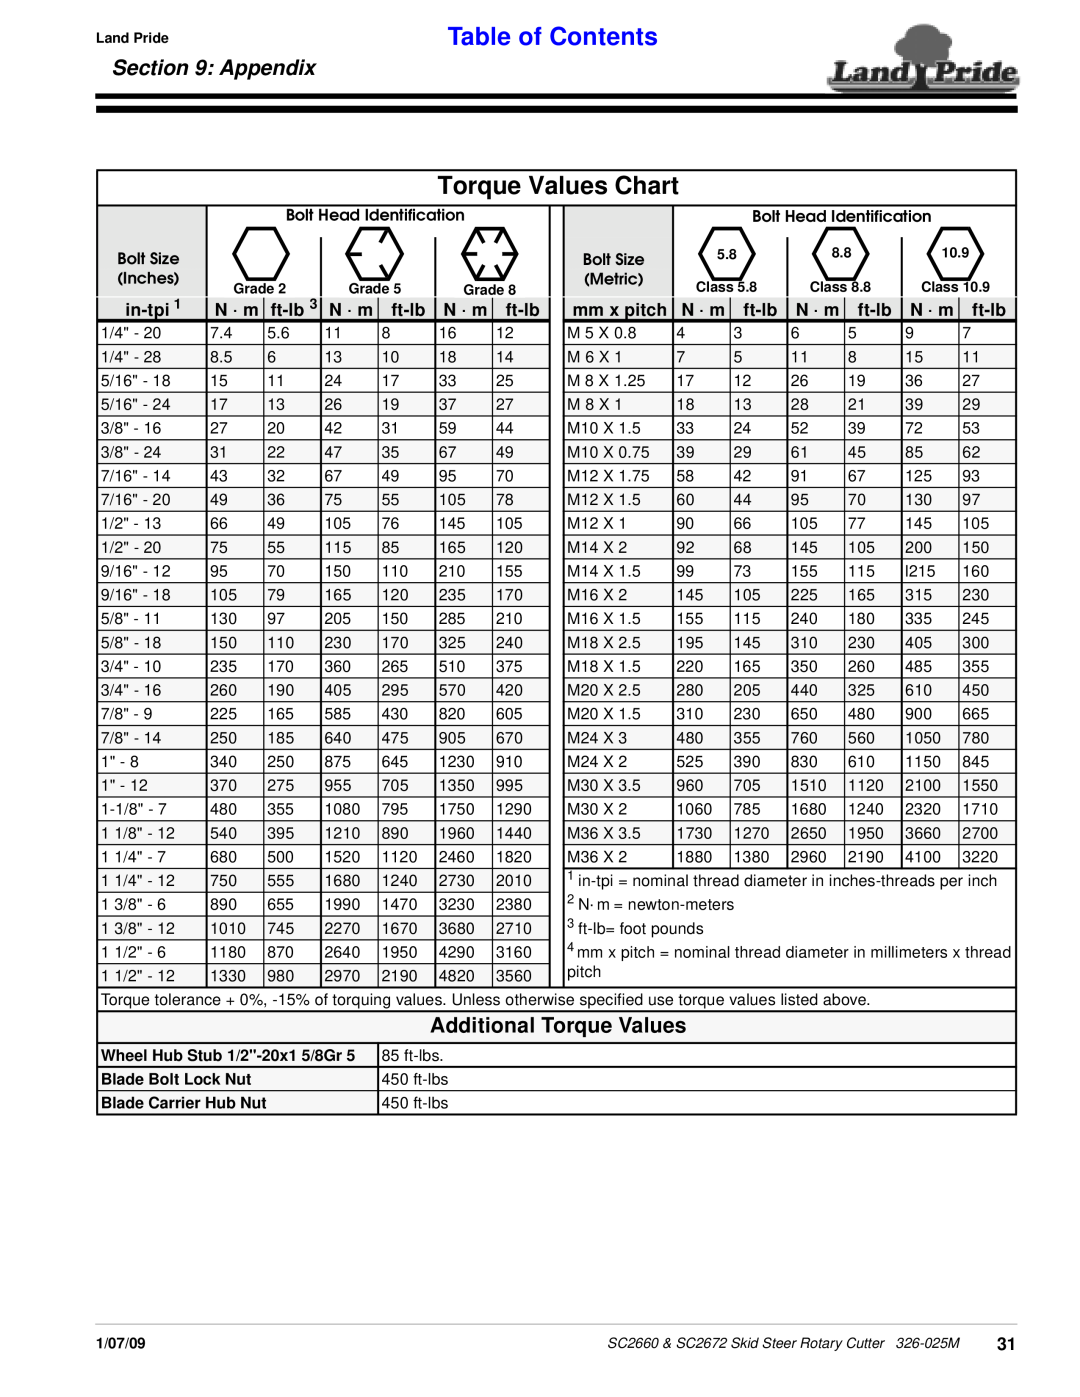 Land Pride SC2672, SC2660 manual Torque Values Chart, Appendix, Additional Torque Values, in-tpi, N · m, ft-lb, mm x pitch 